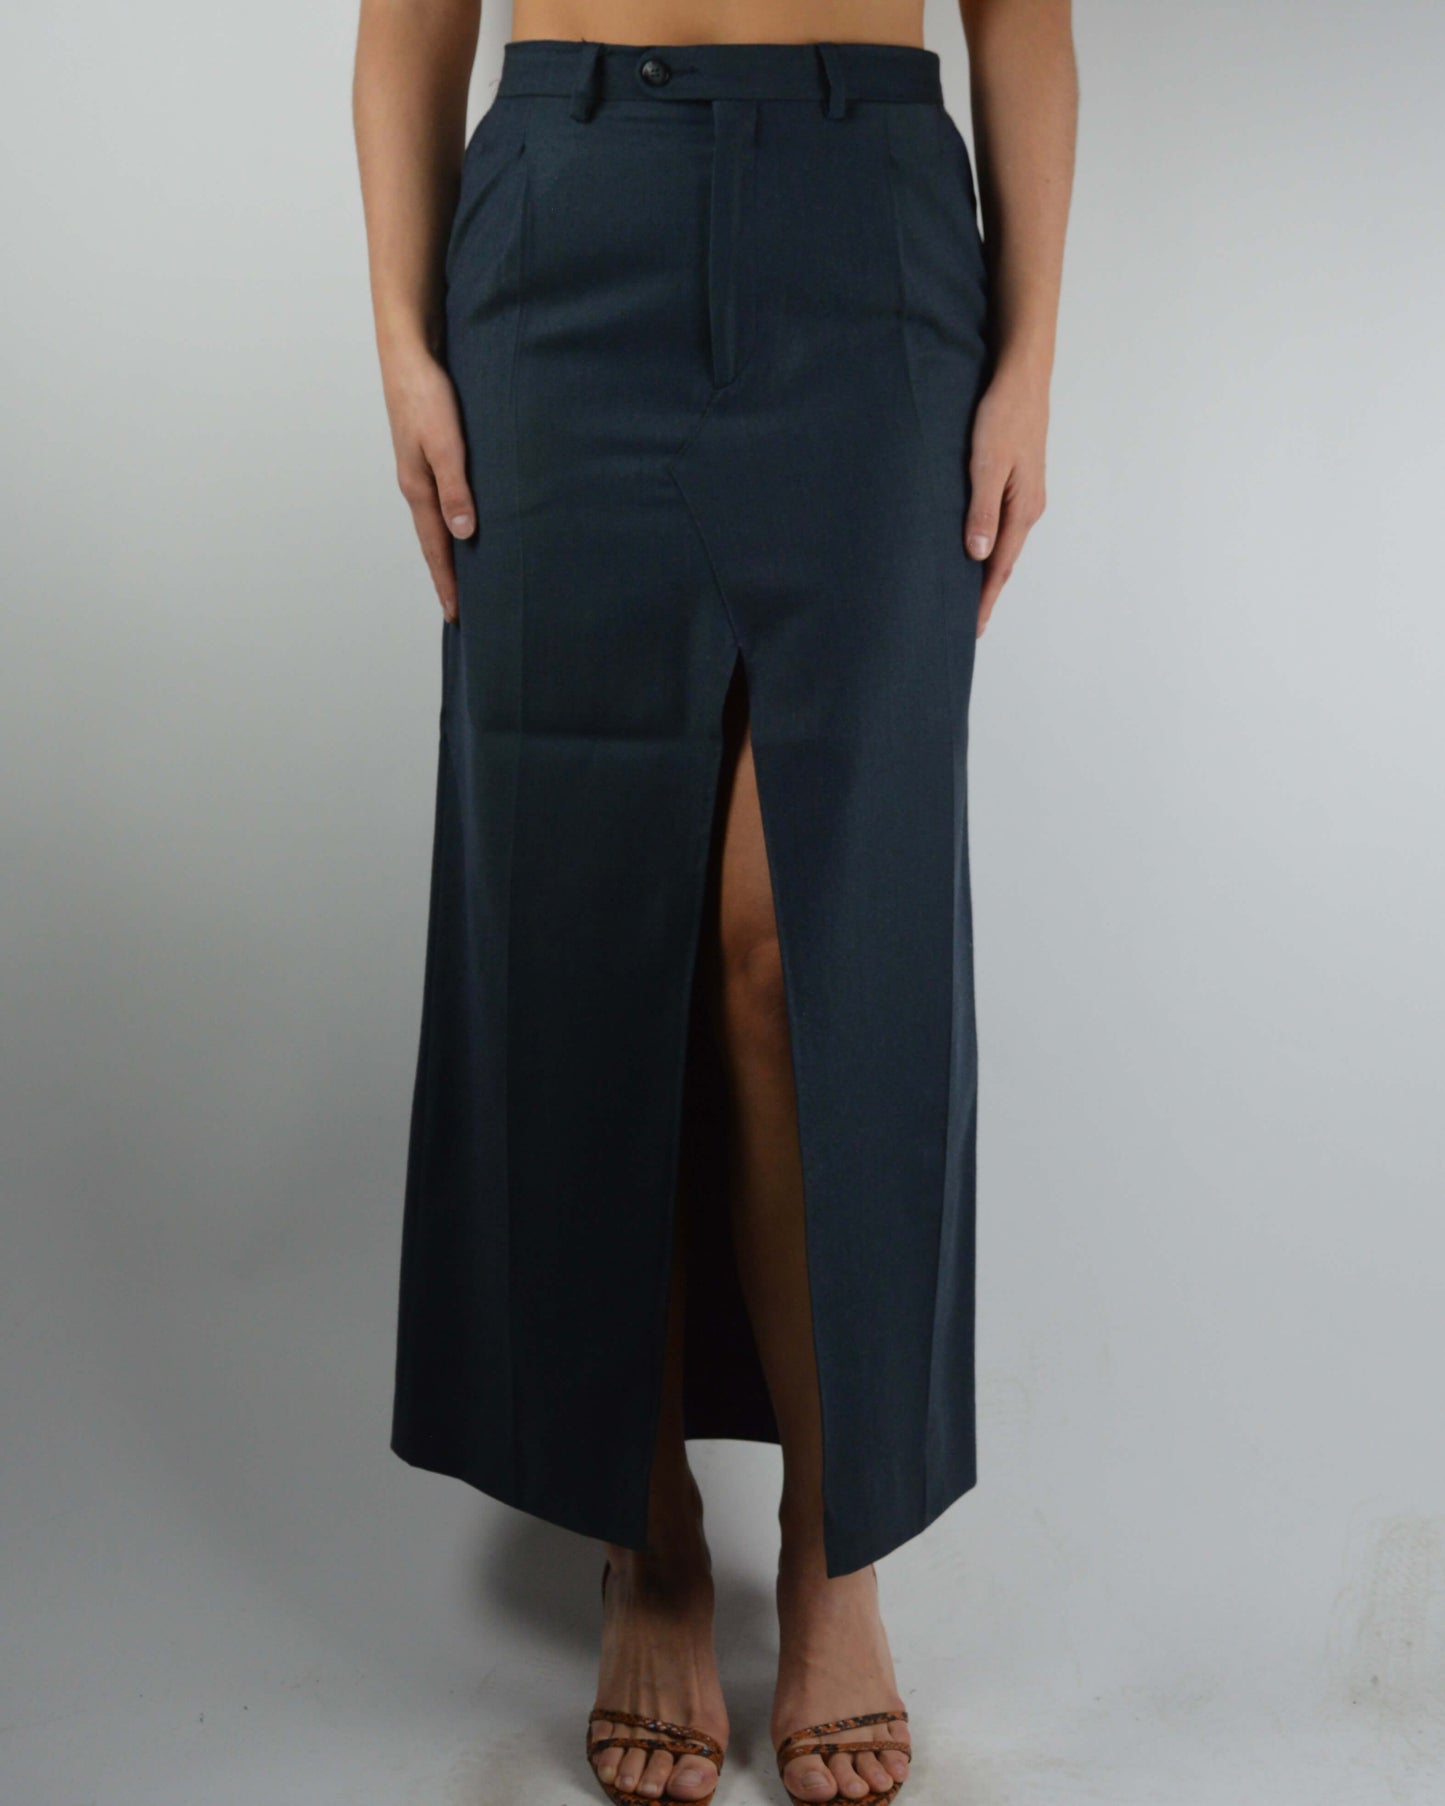 Long Skirt - Seawater Blue (XS/S)